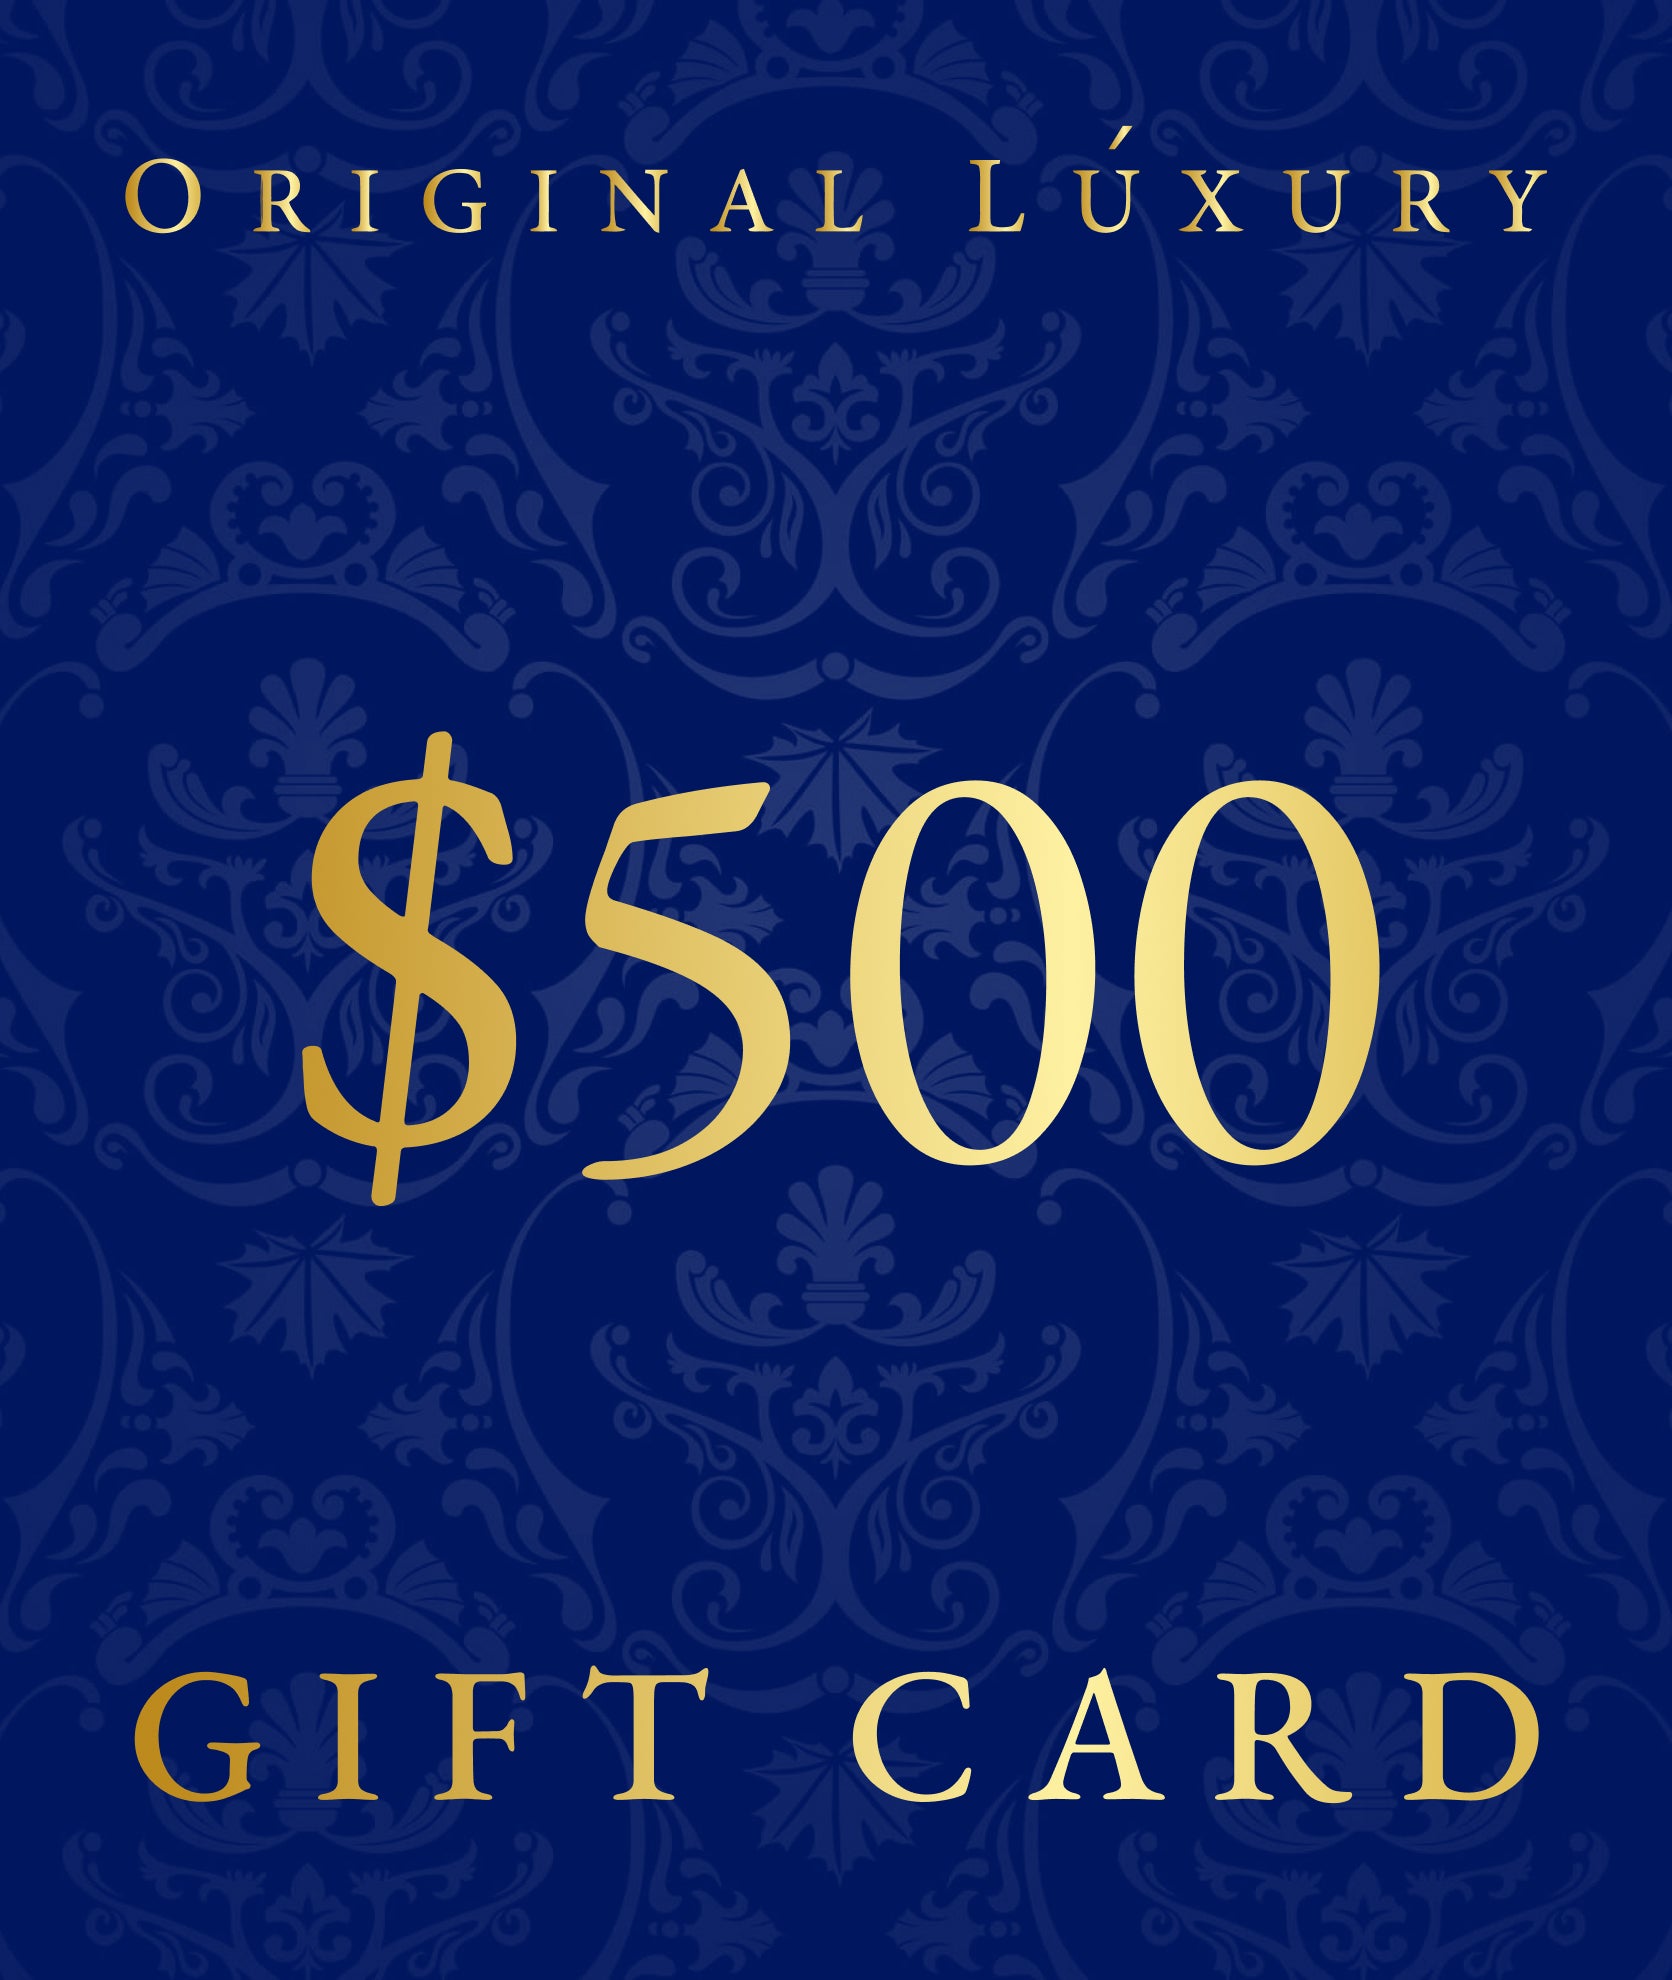 OriginalLuxury Gift Card | $500